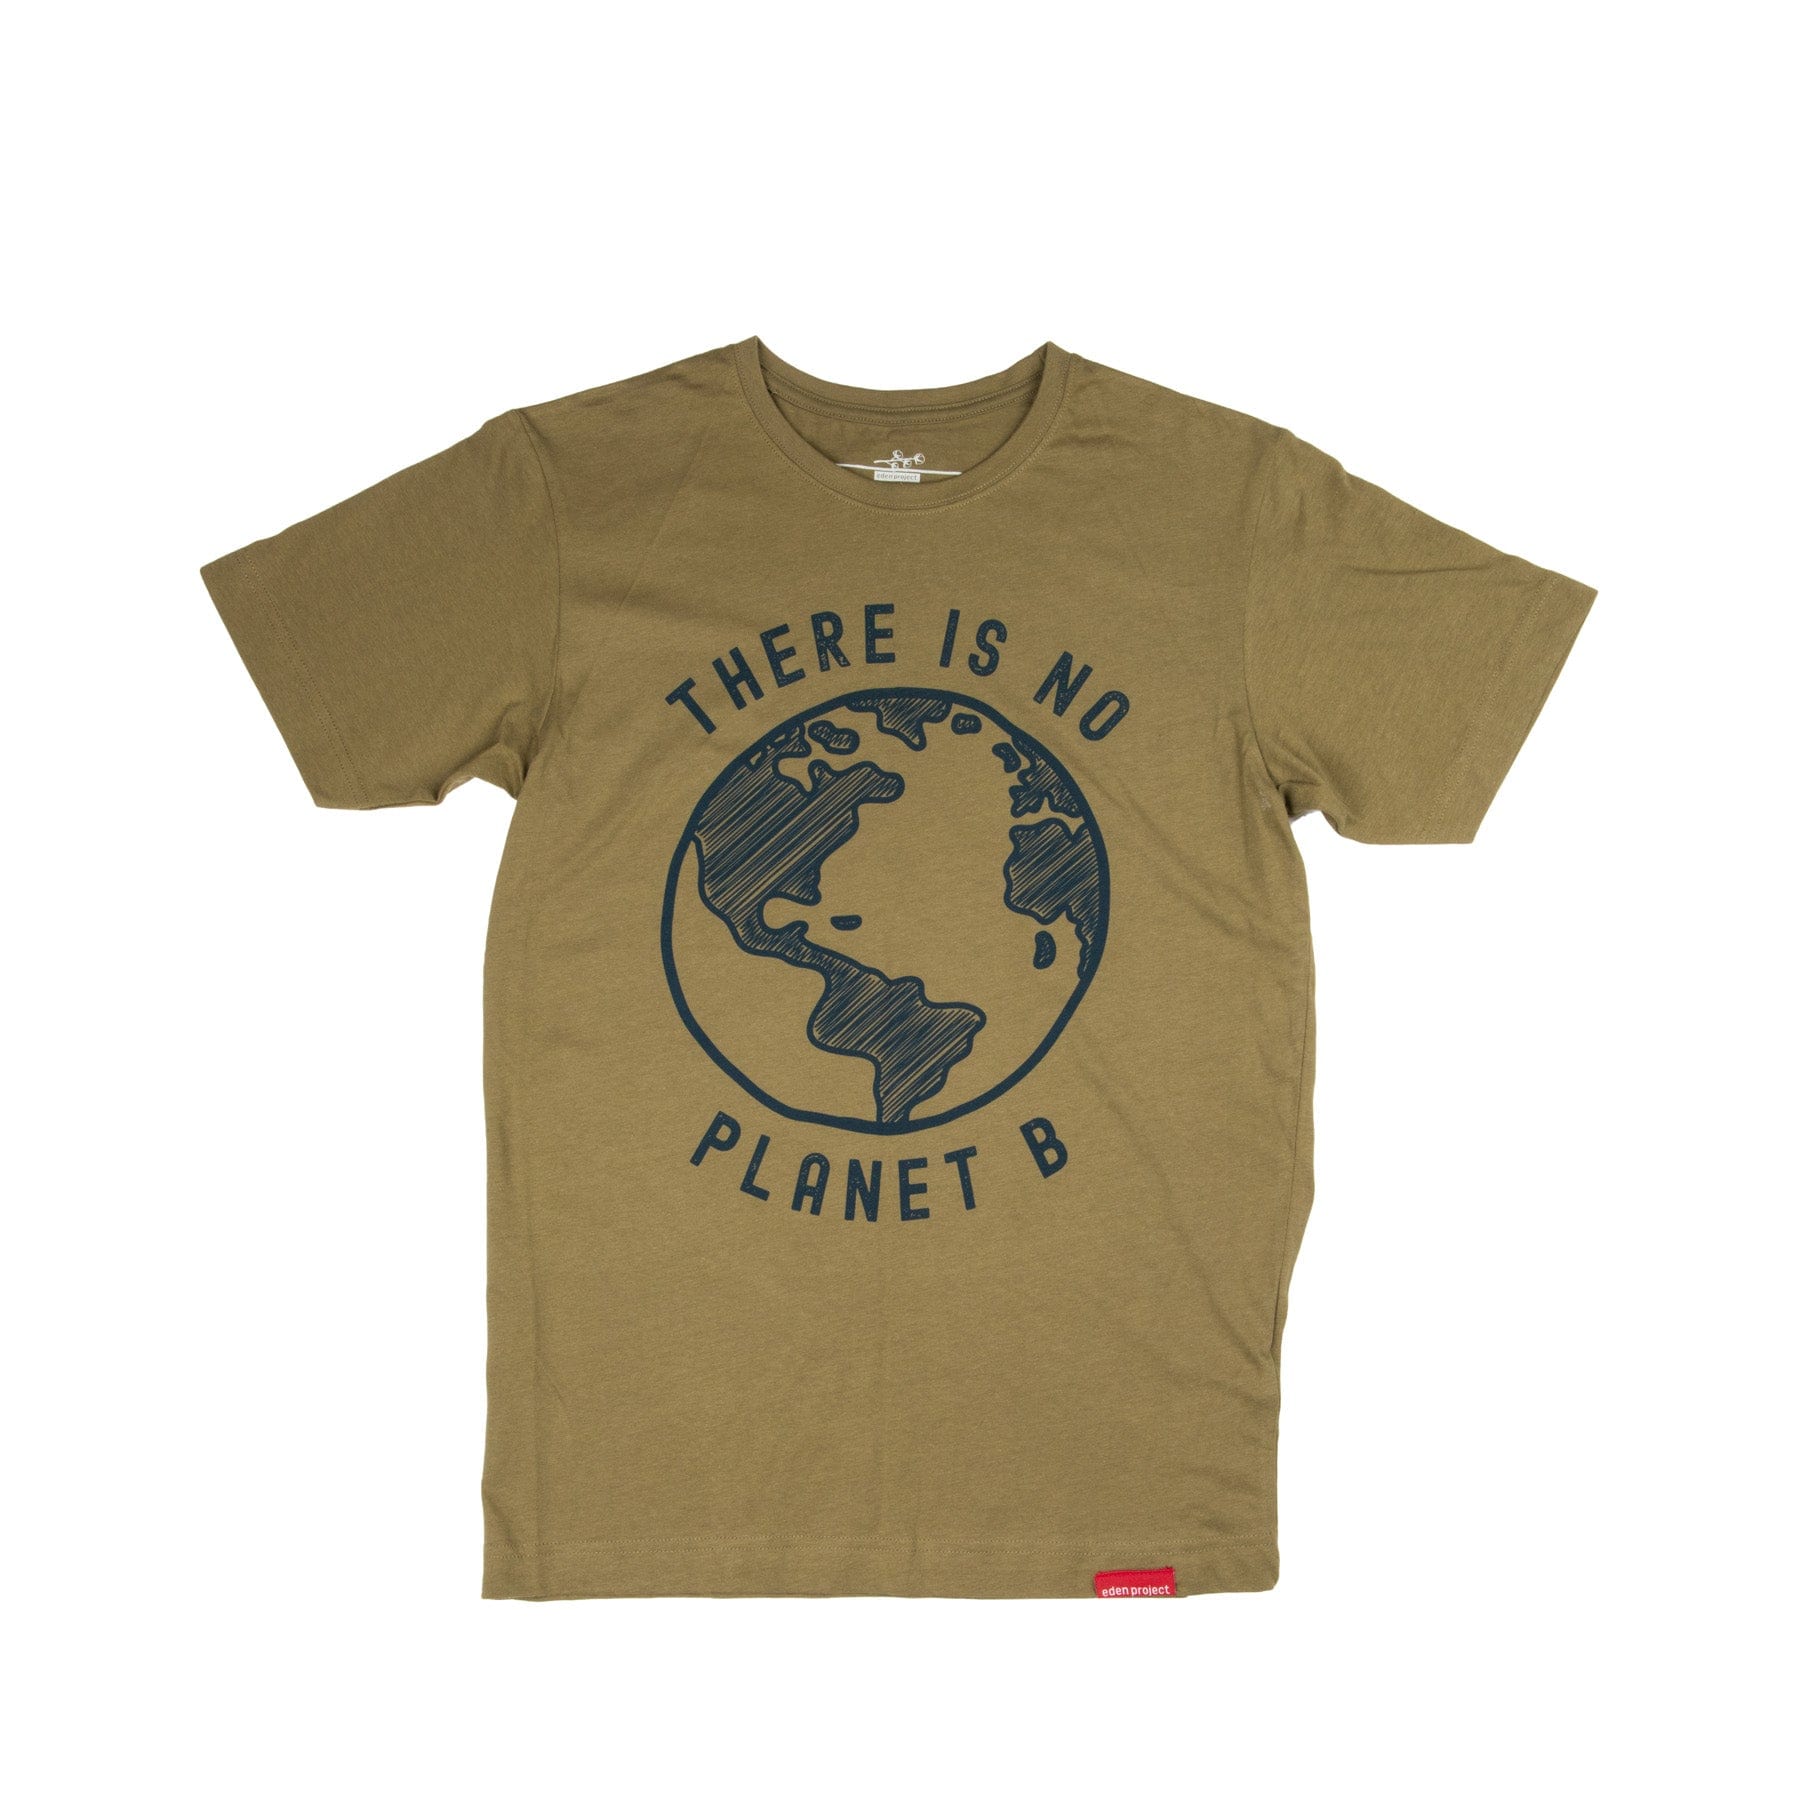 Men's planet b t-shirt